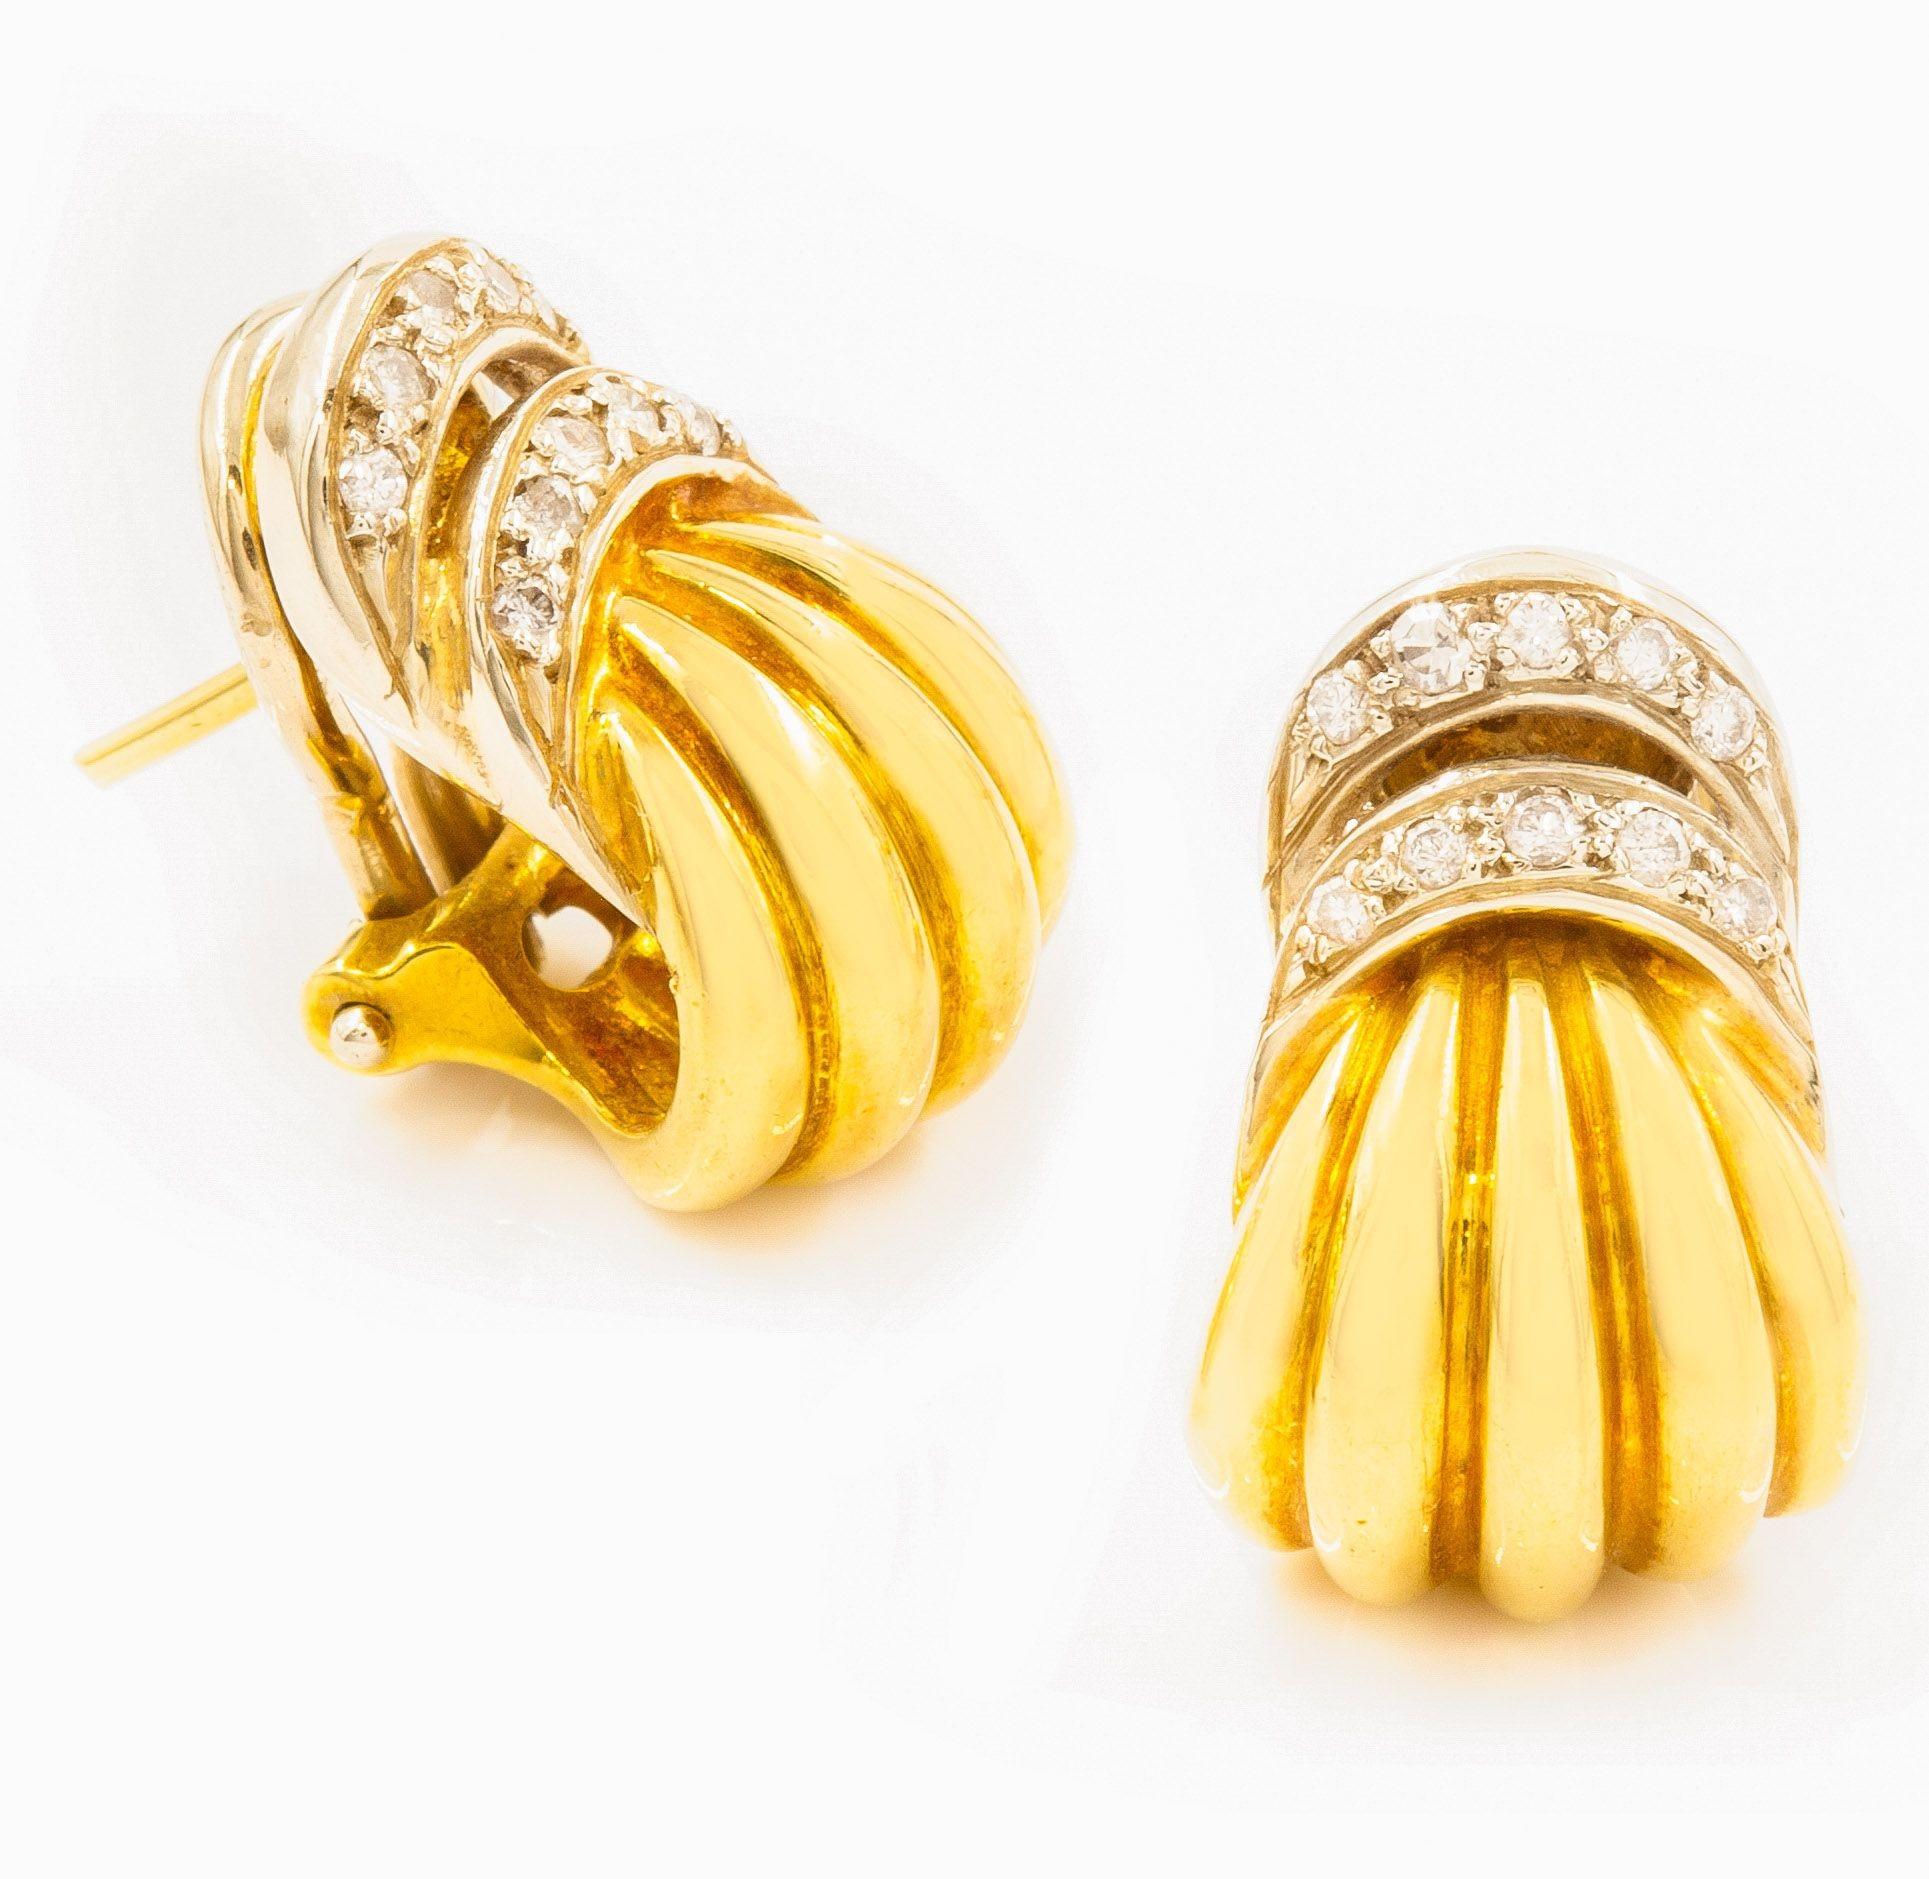 Pair of 18K Yellow Gold & Gemstone Swirl Earrings For Sale 2